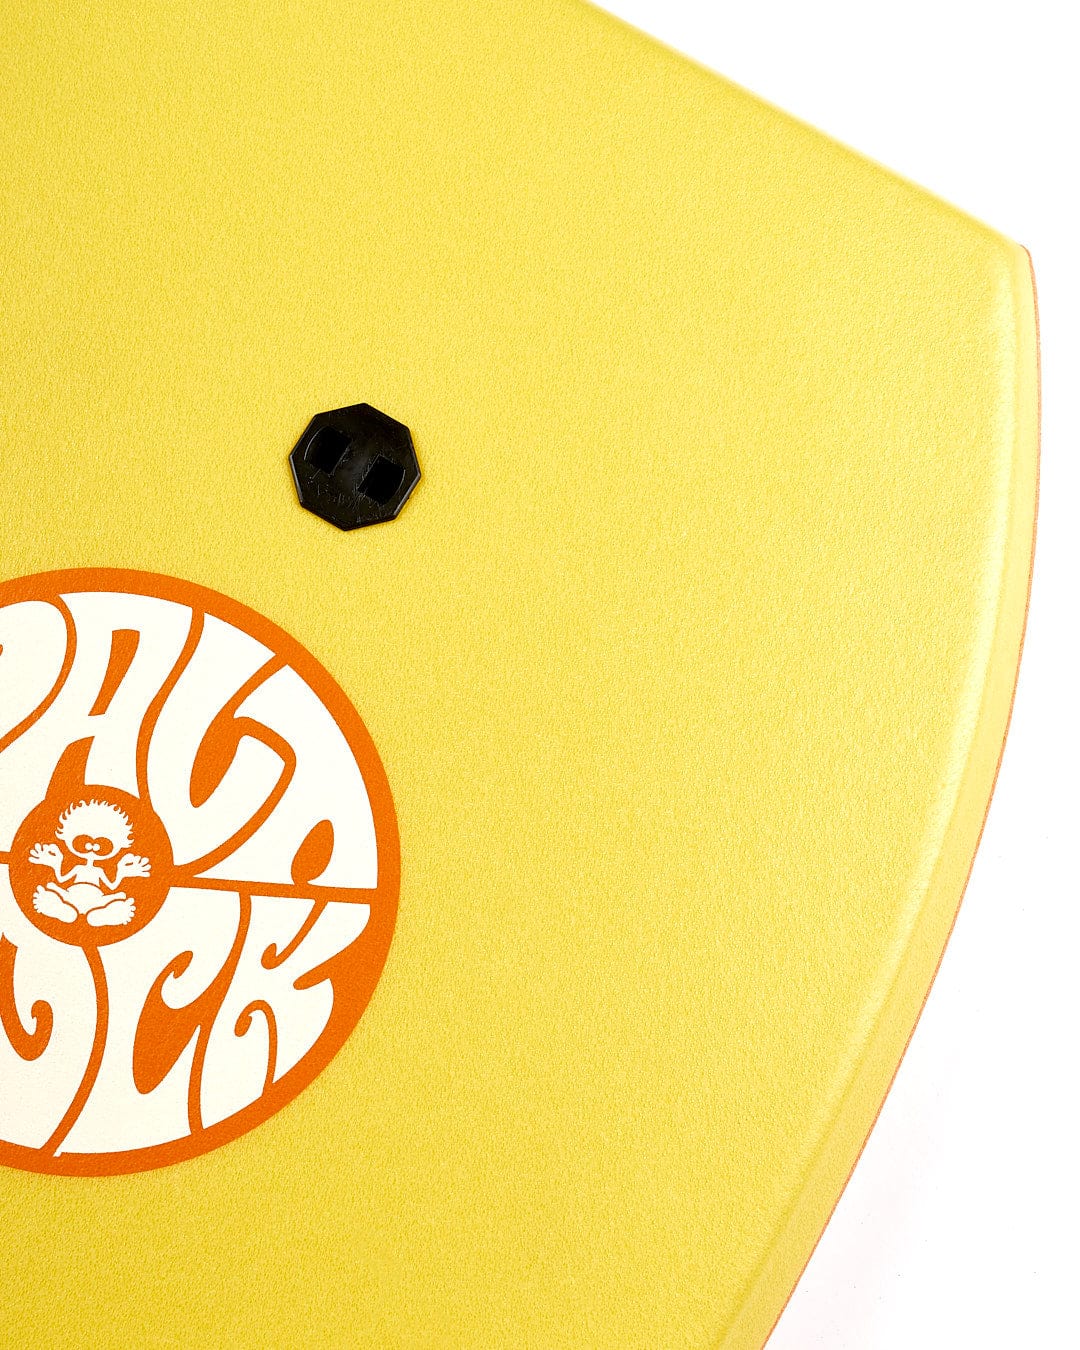 A Monstermash 37" Bodyboard - Yellow/Orange with a Saltrock logo on it.